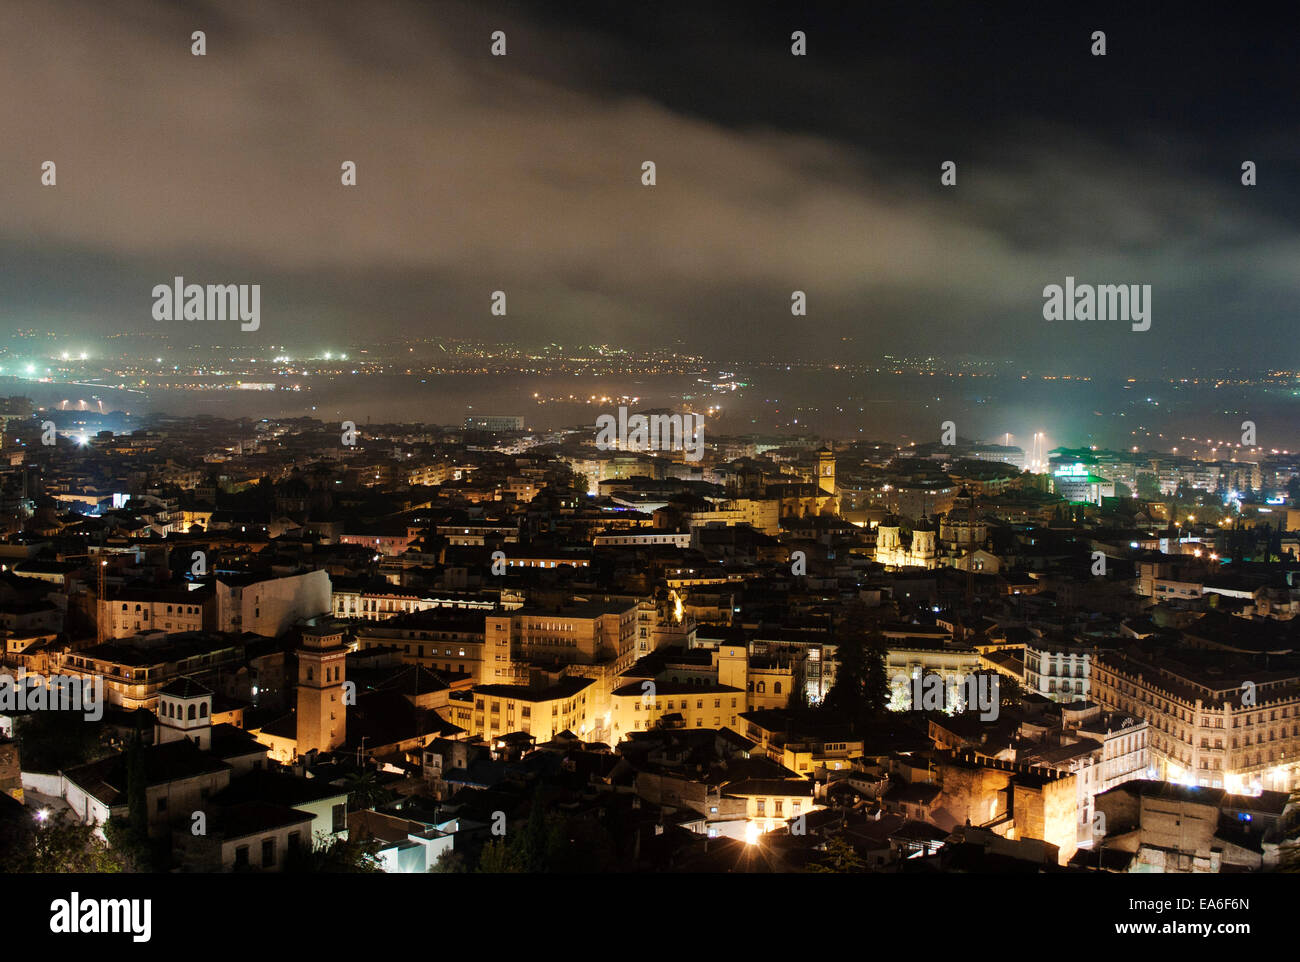 City skyline at night, Granada, Spain Stock Photo